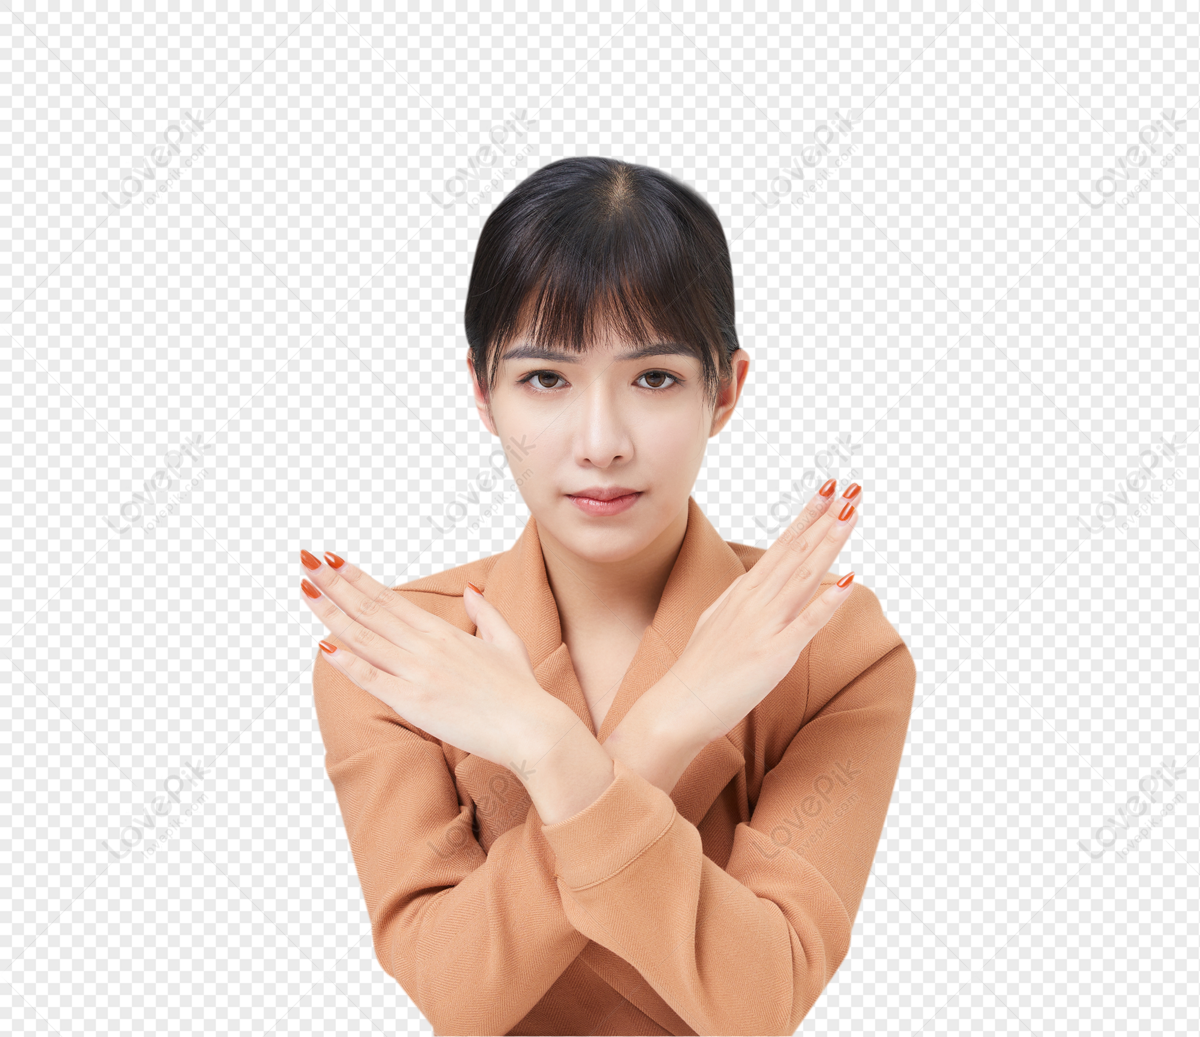 Reject Gesture PNG Transparent Images Free Download, Vector Files